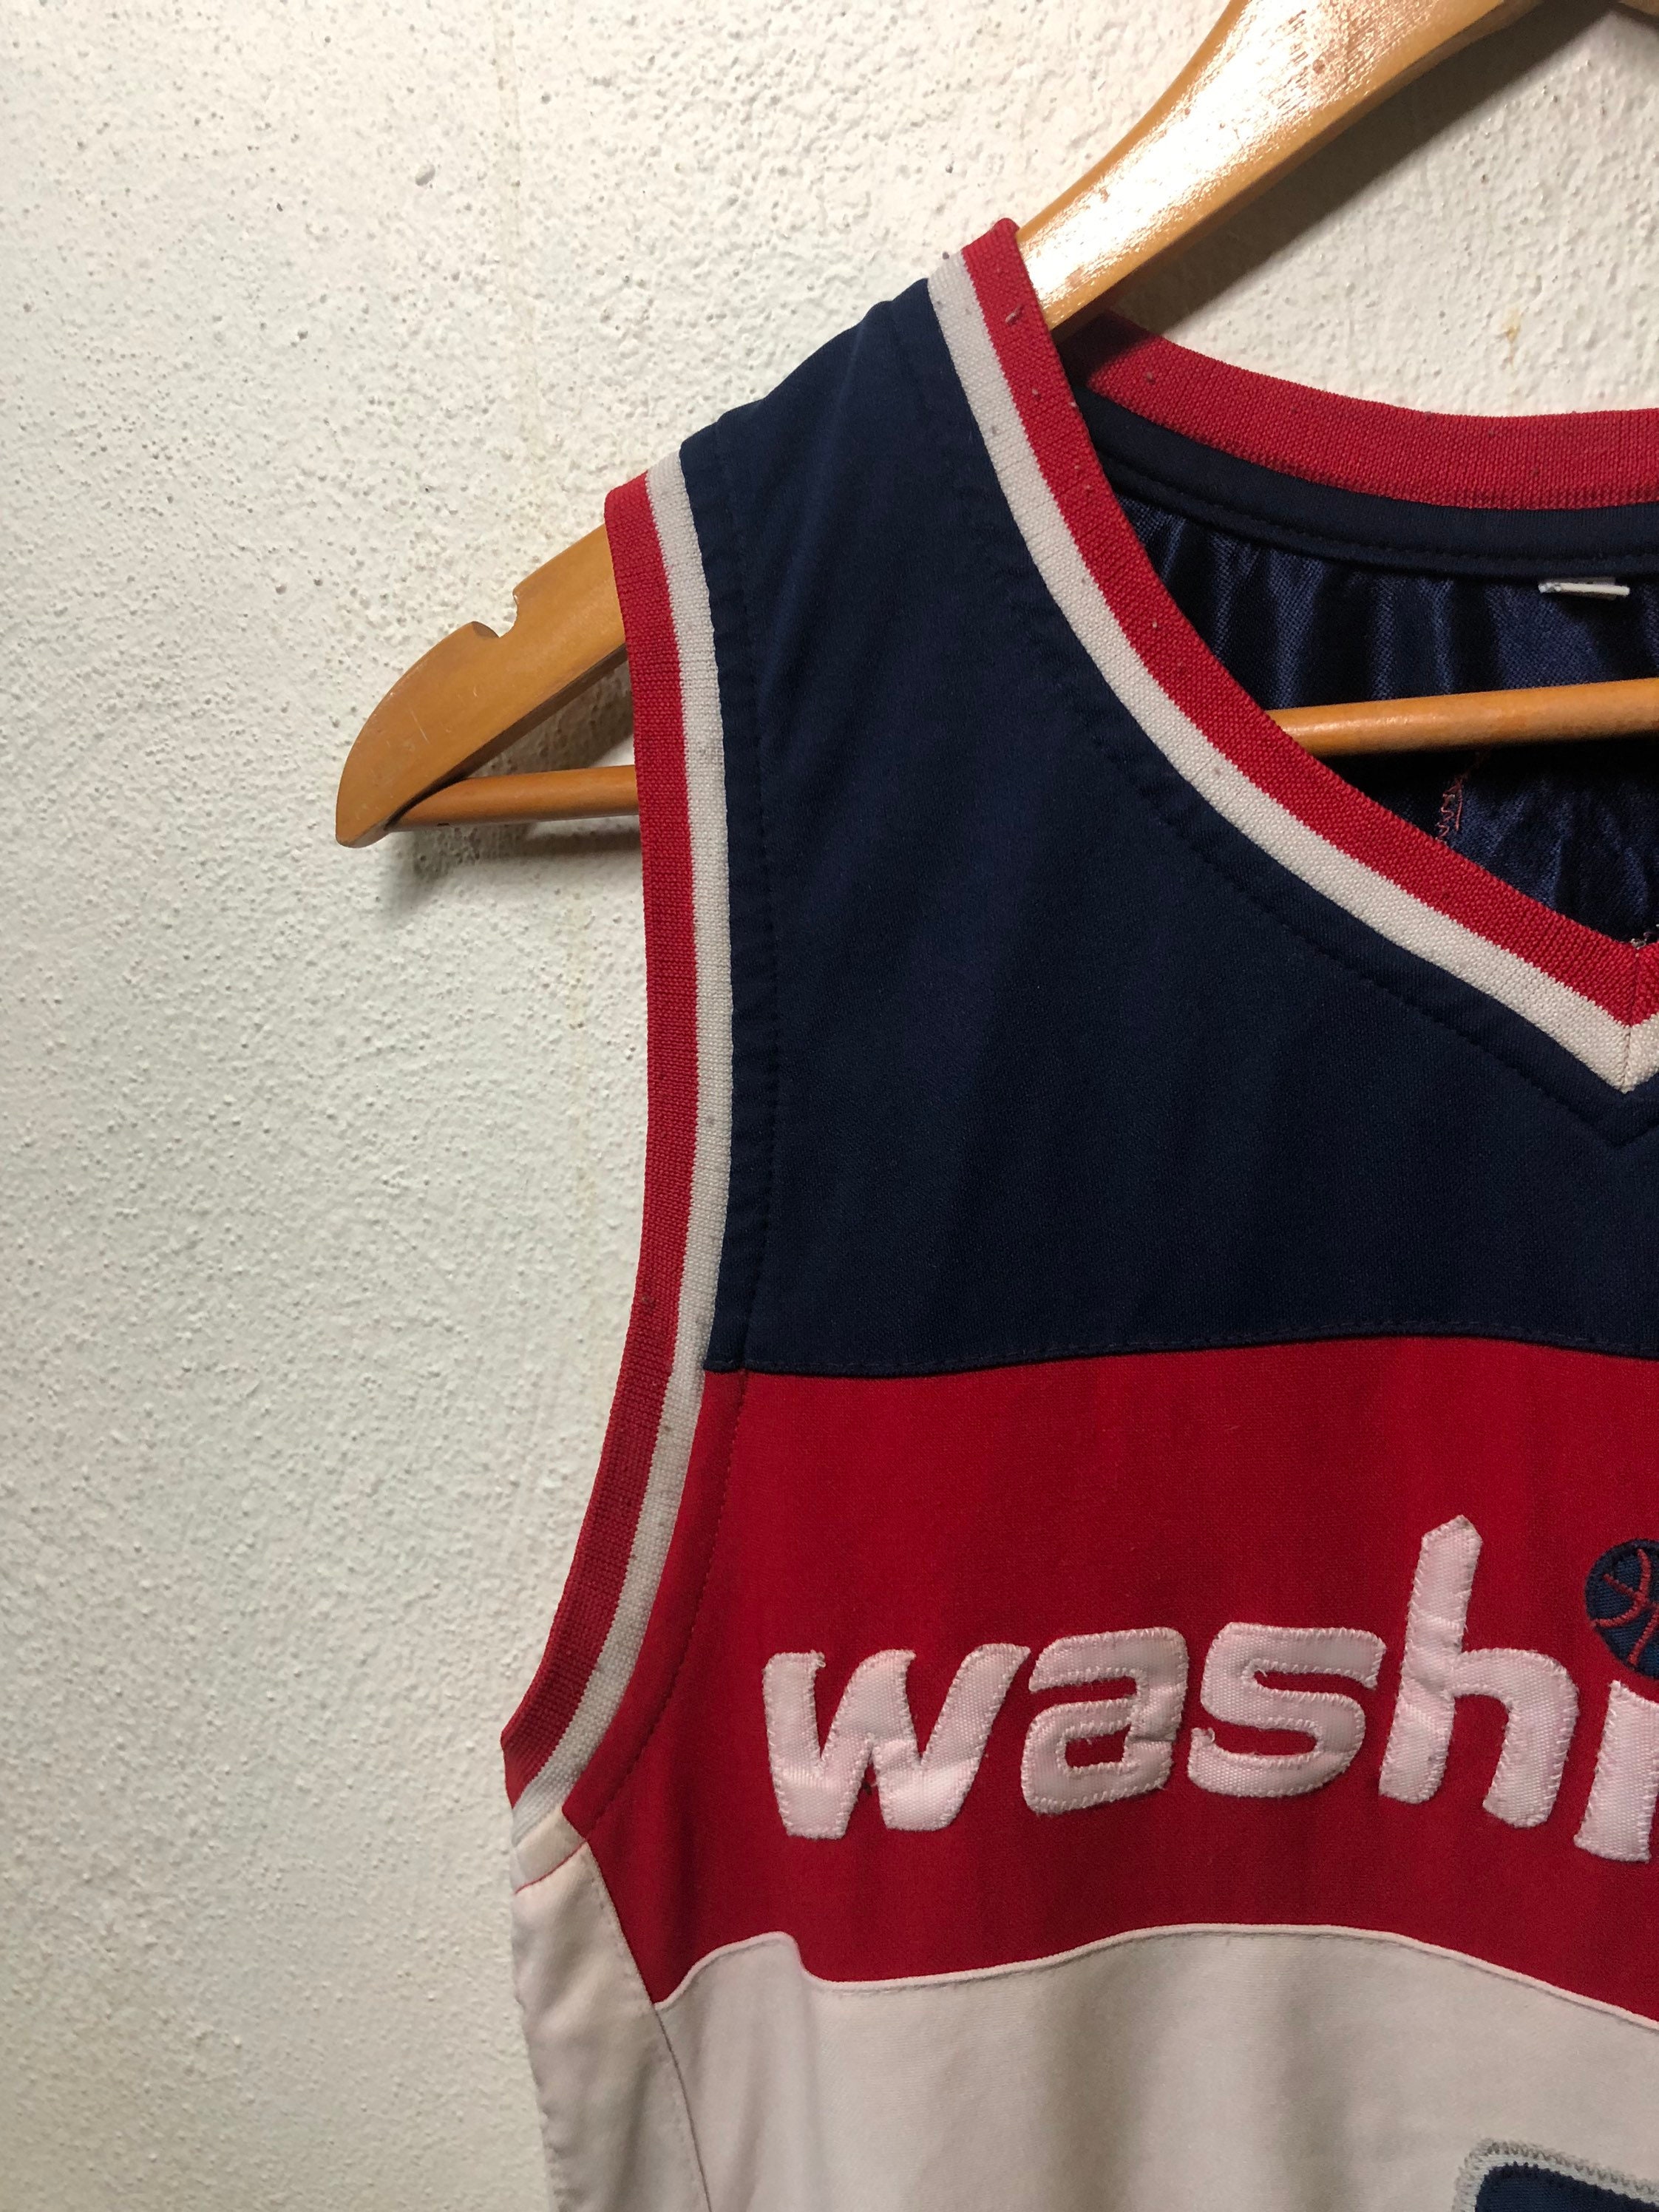 Authentic Rare Vintage Adidas NBA Washington Wizards John Wall Basketball  Jersey